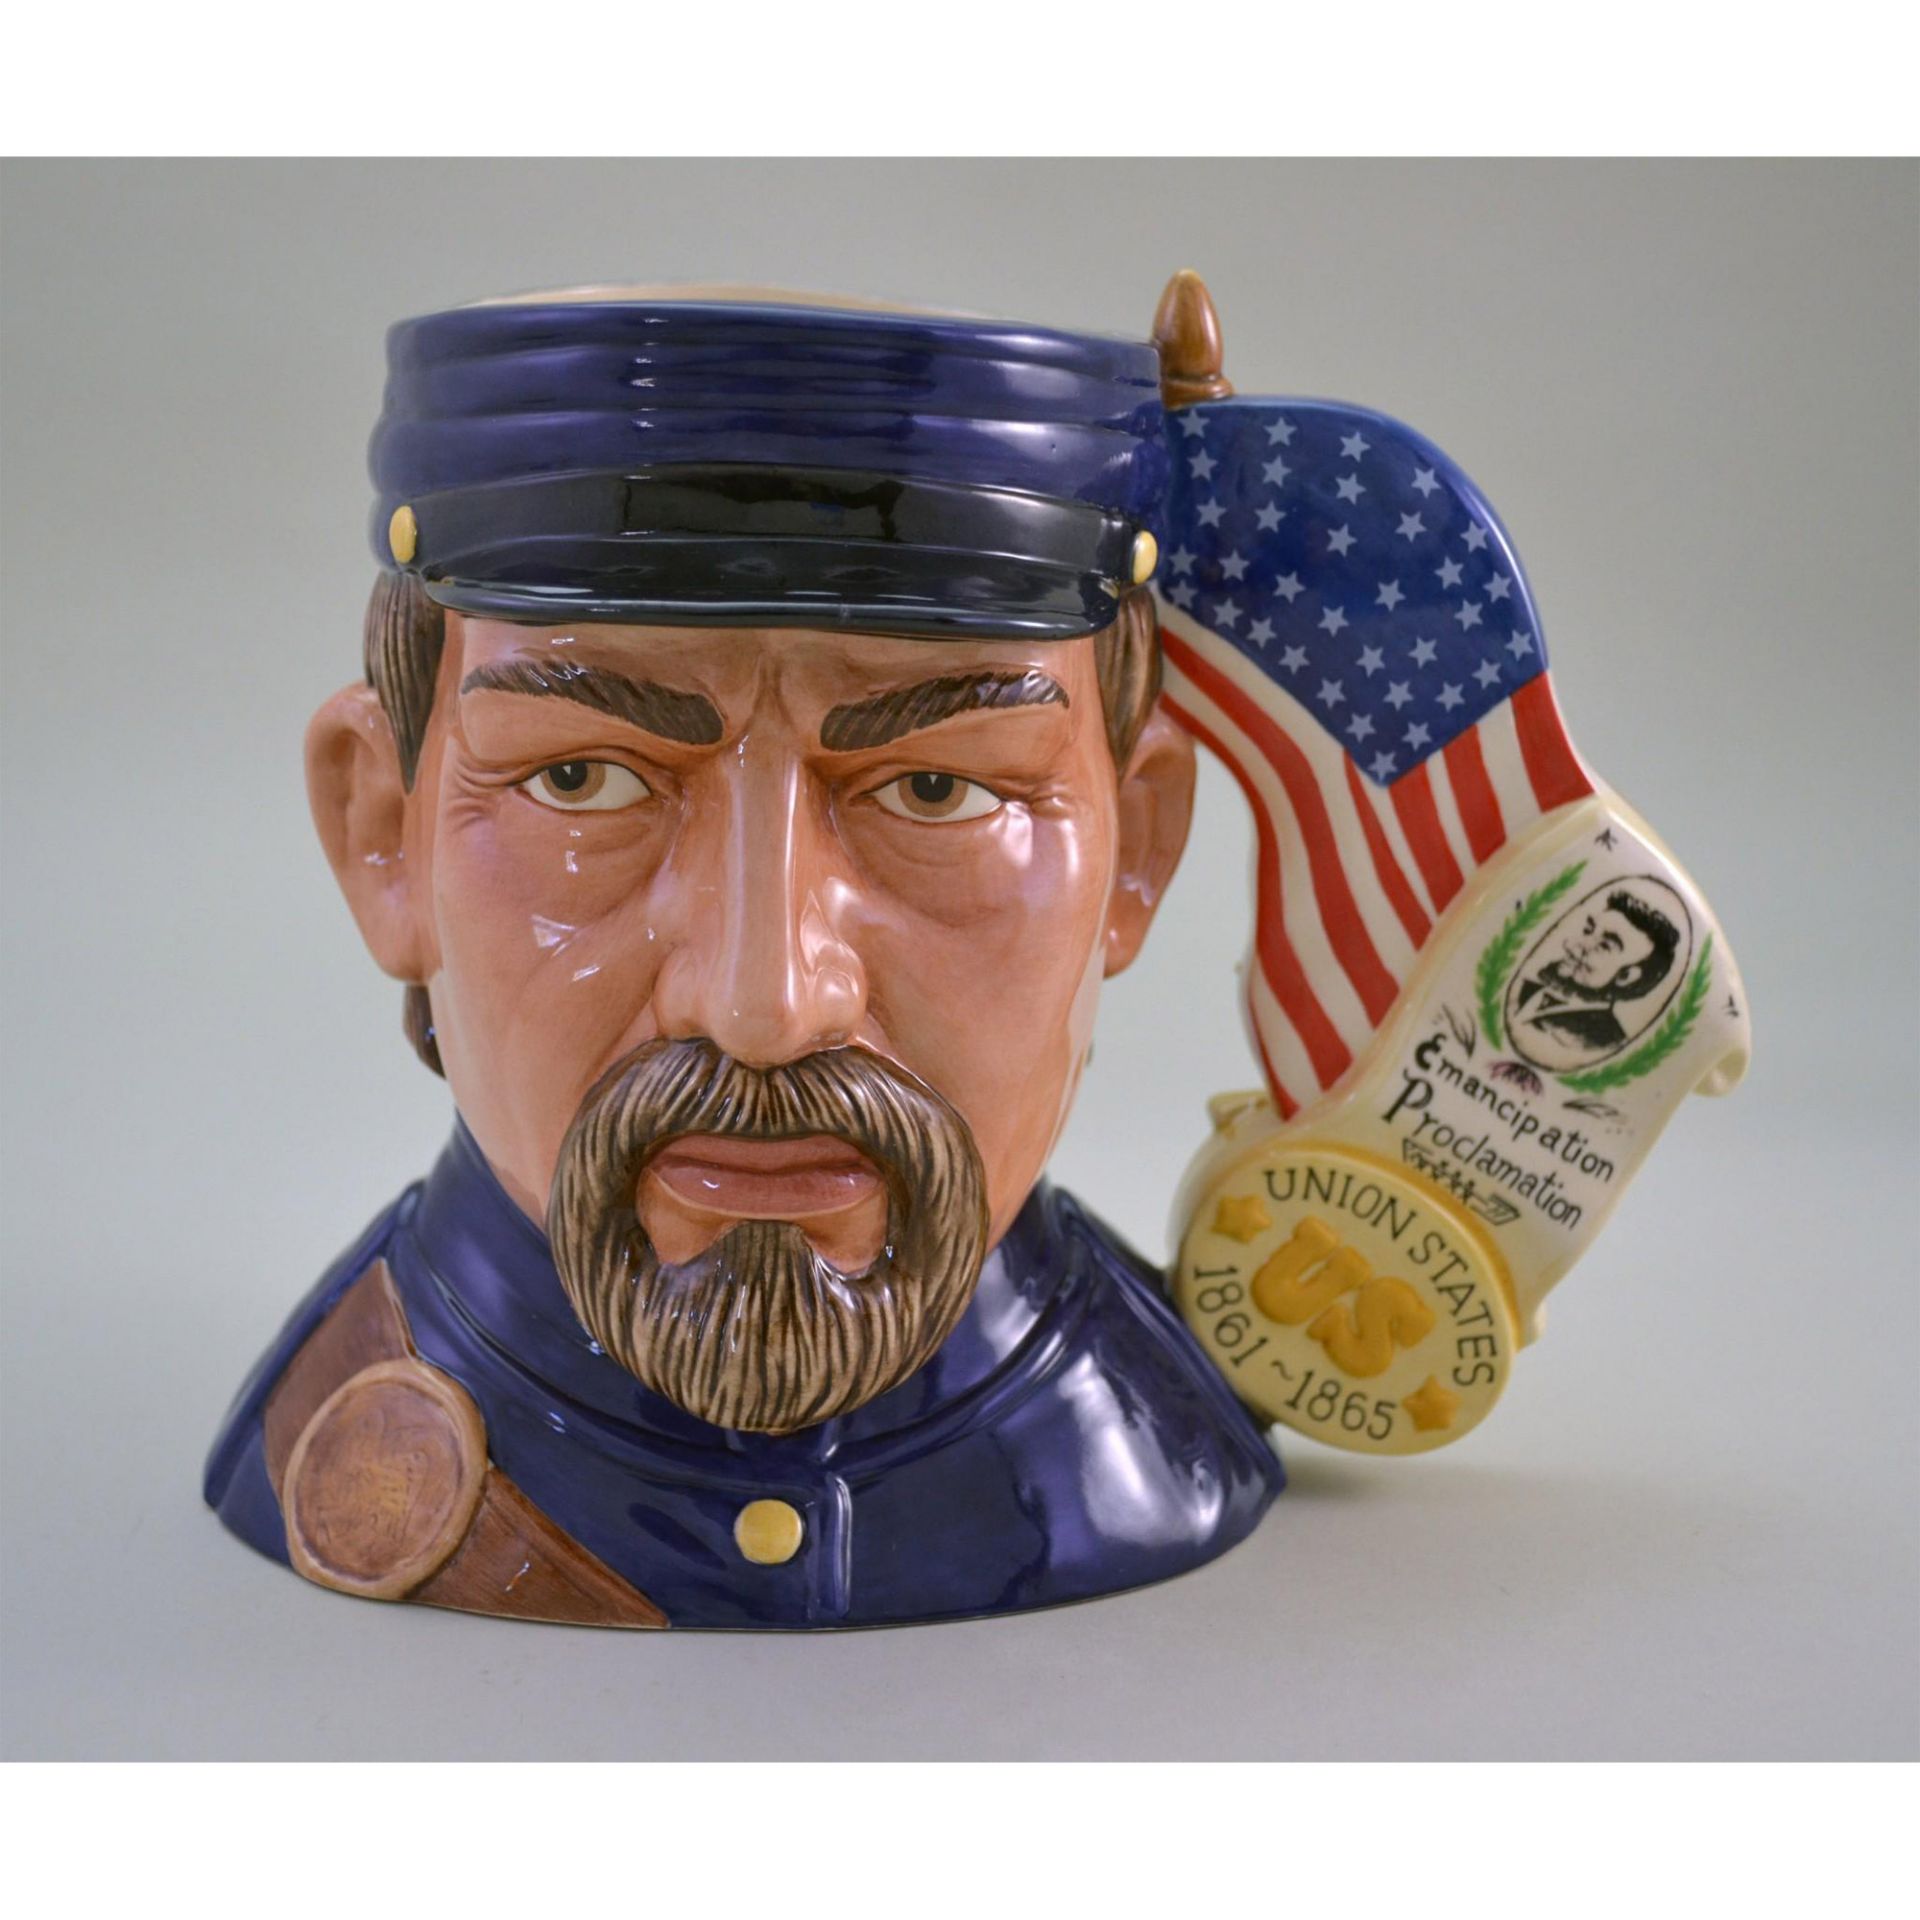 Royal Doulton Porcelain Character Jug Us Wars "Civil War" D7266, 2007, Exclusive For The Us - Image 6 of 6